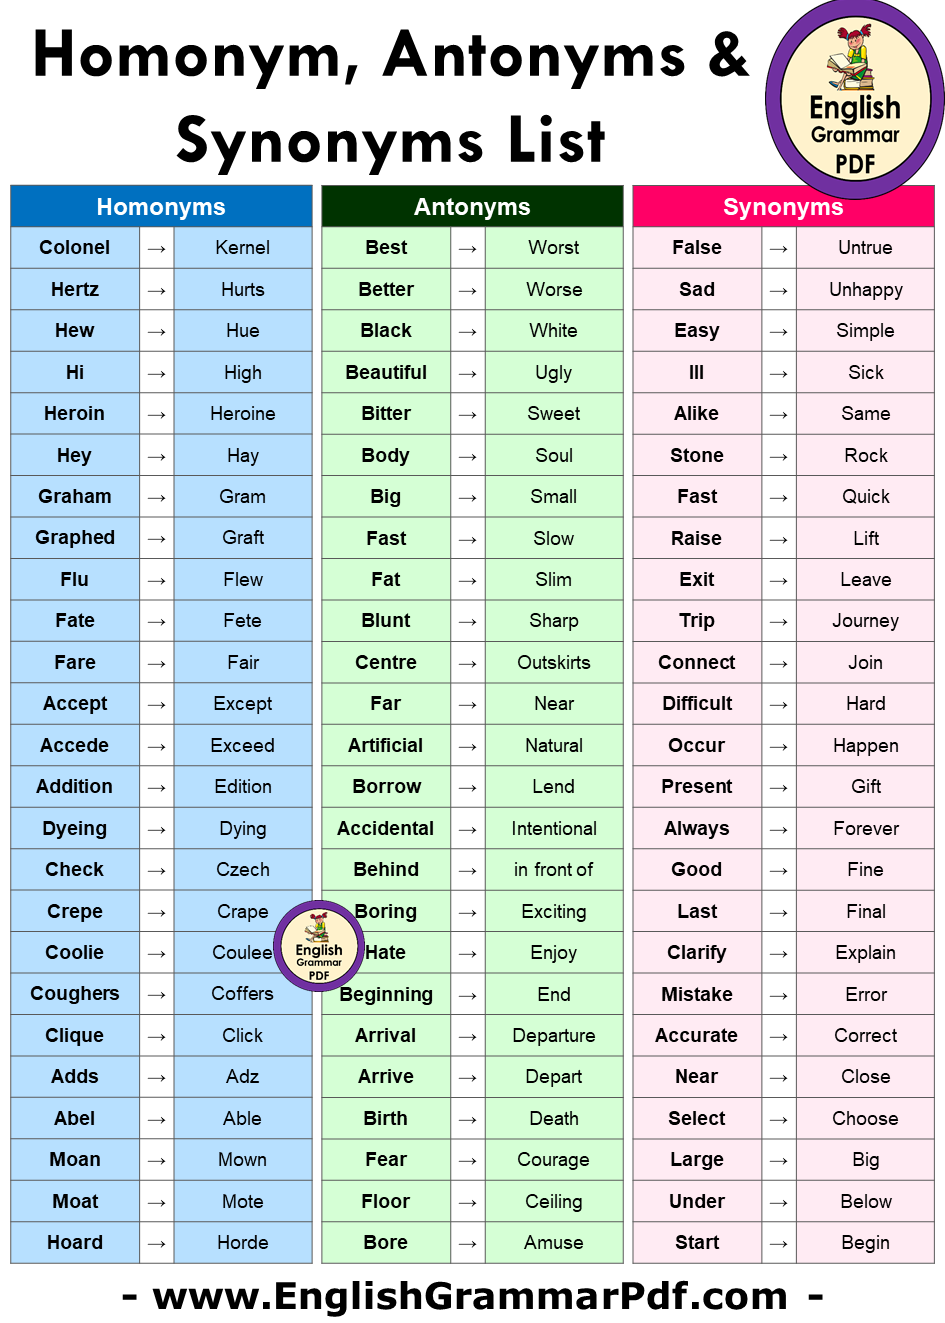 Synonyms Antonyms And Homonyms Words List In English Pdf English Grammar Pdf